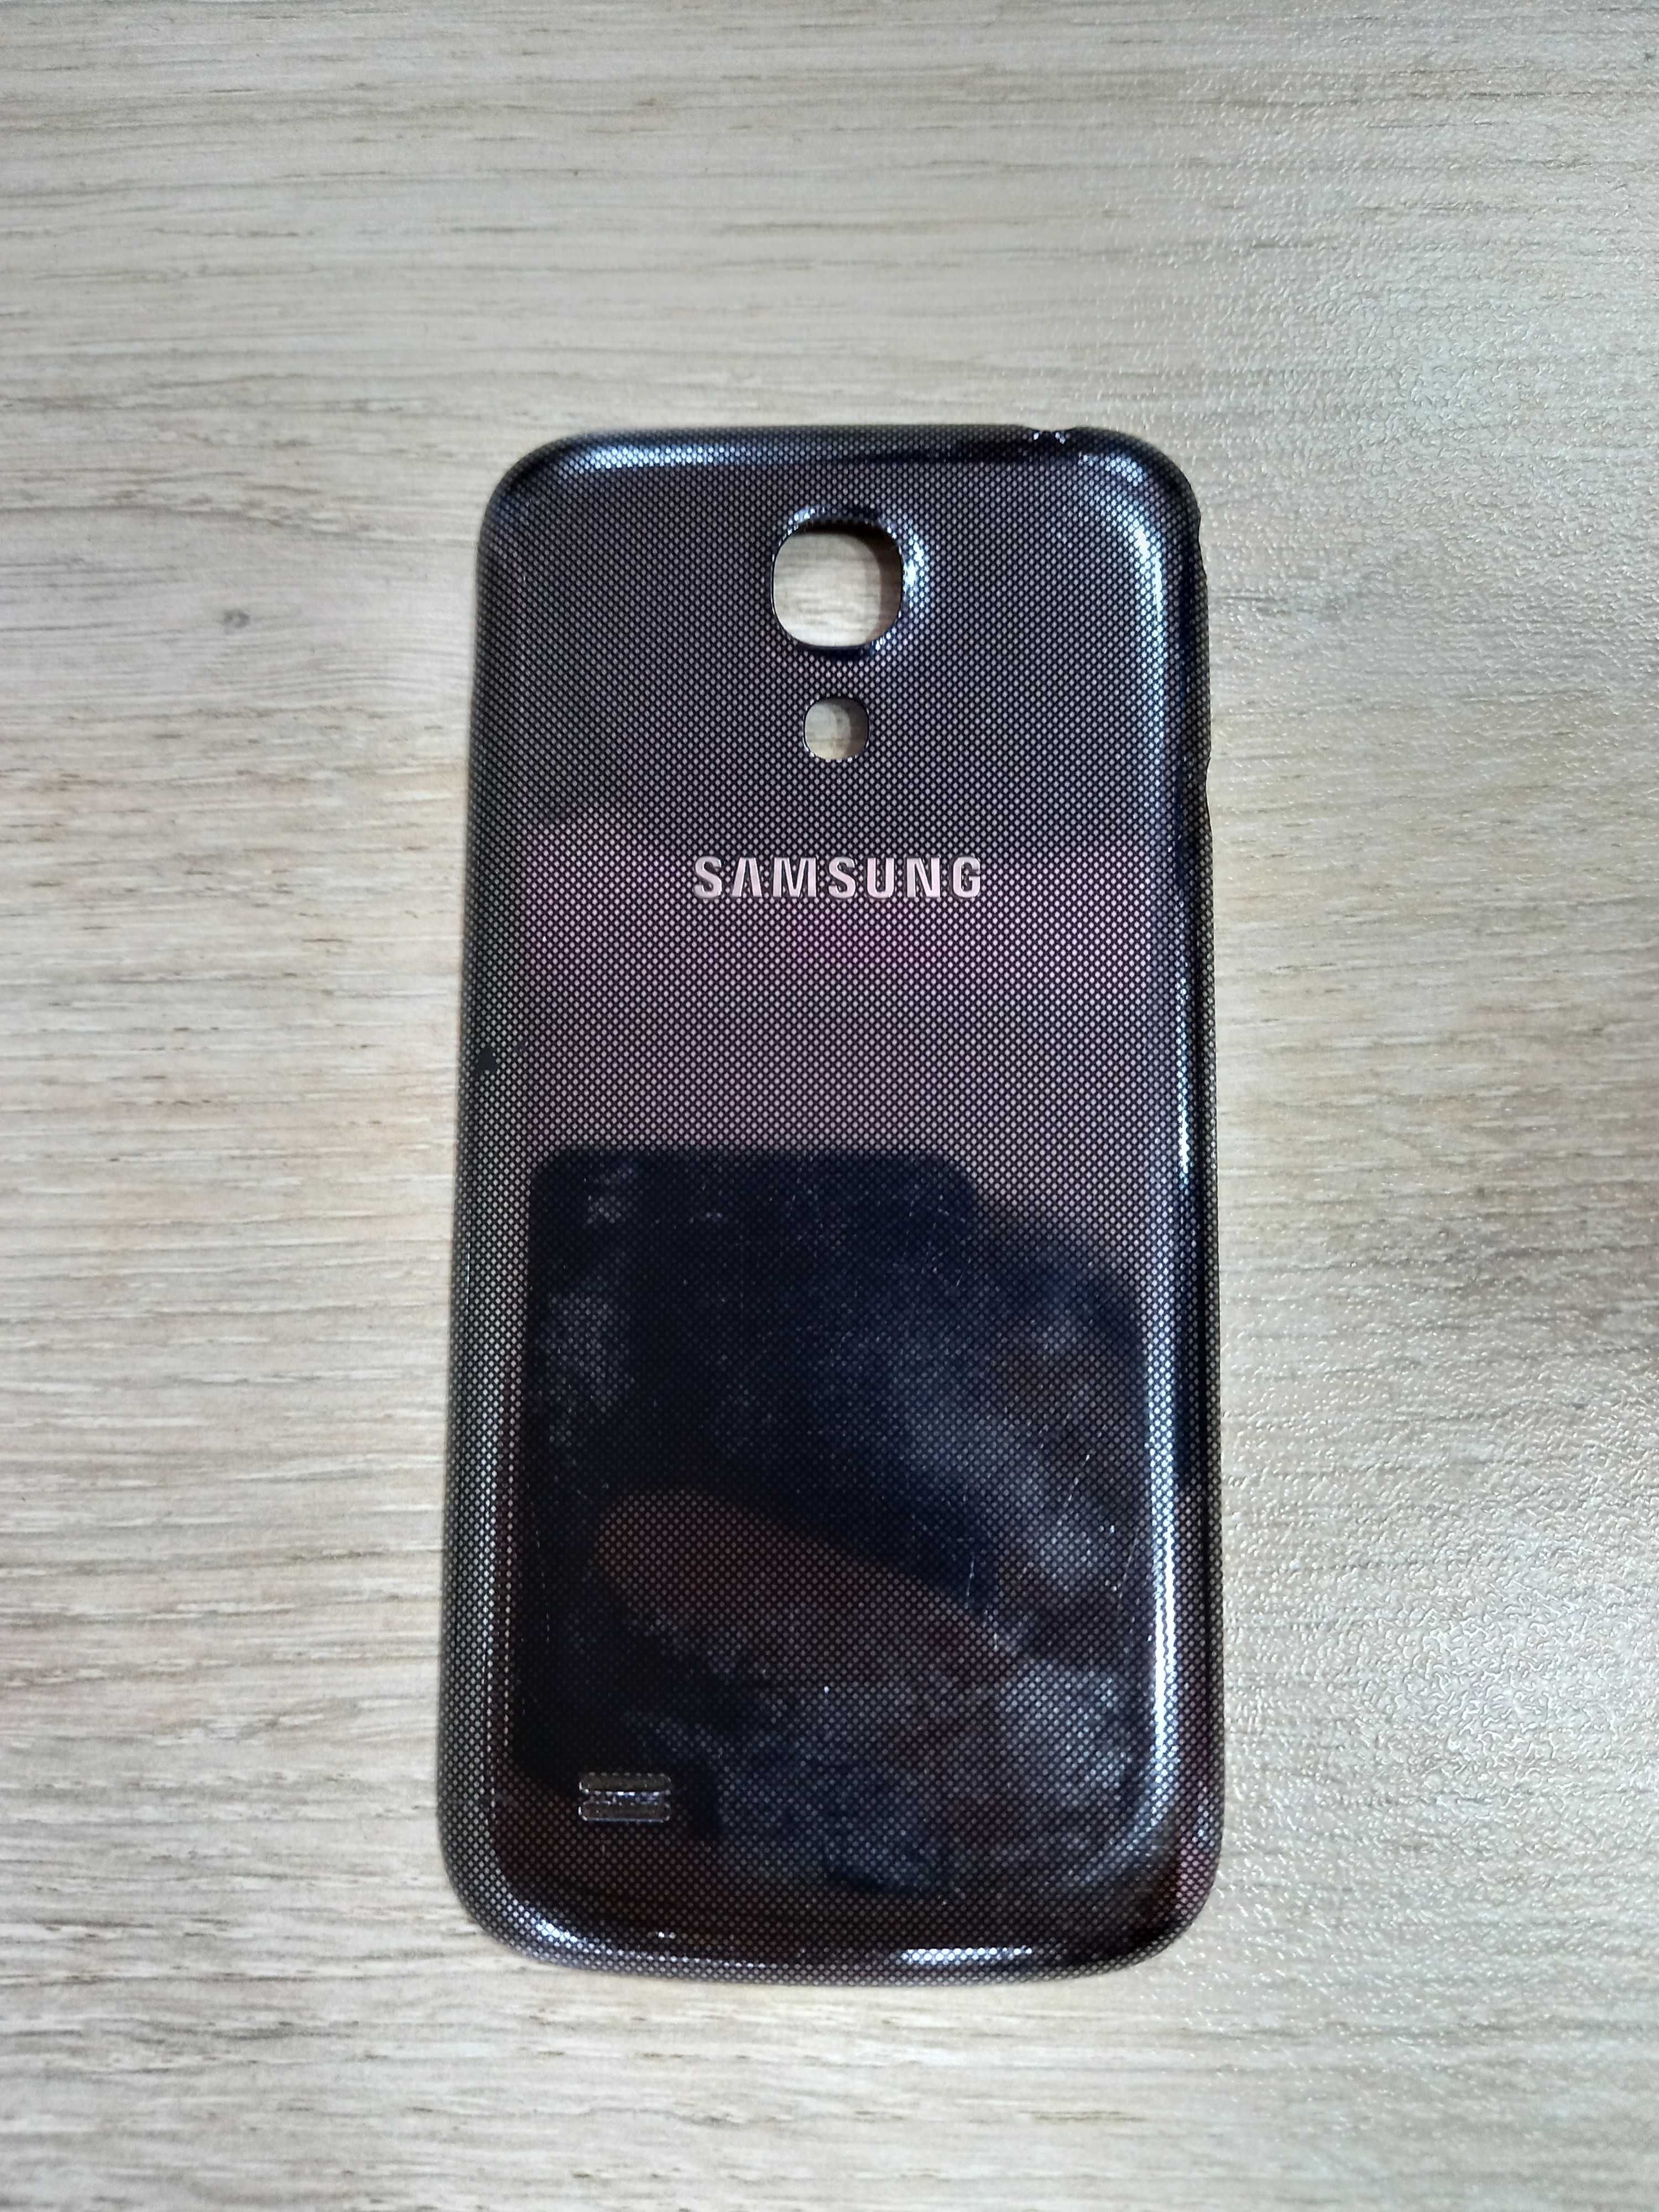 Samsung galaxy S4 mini